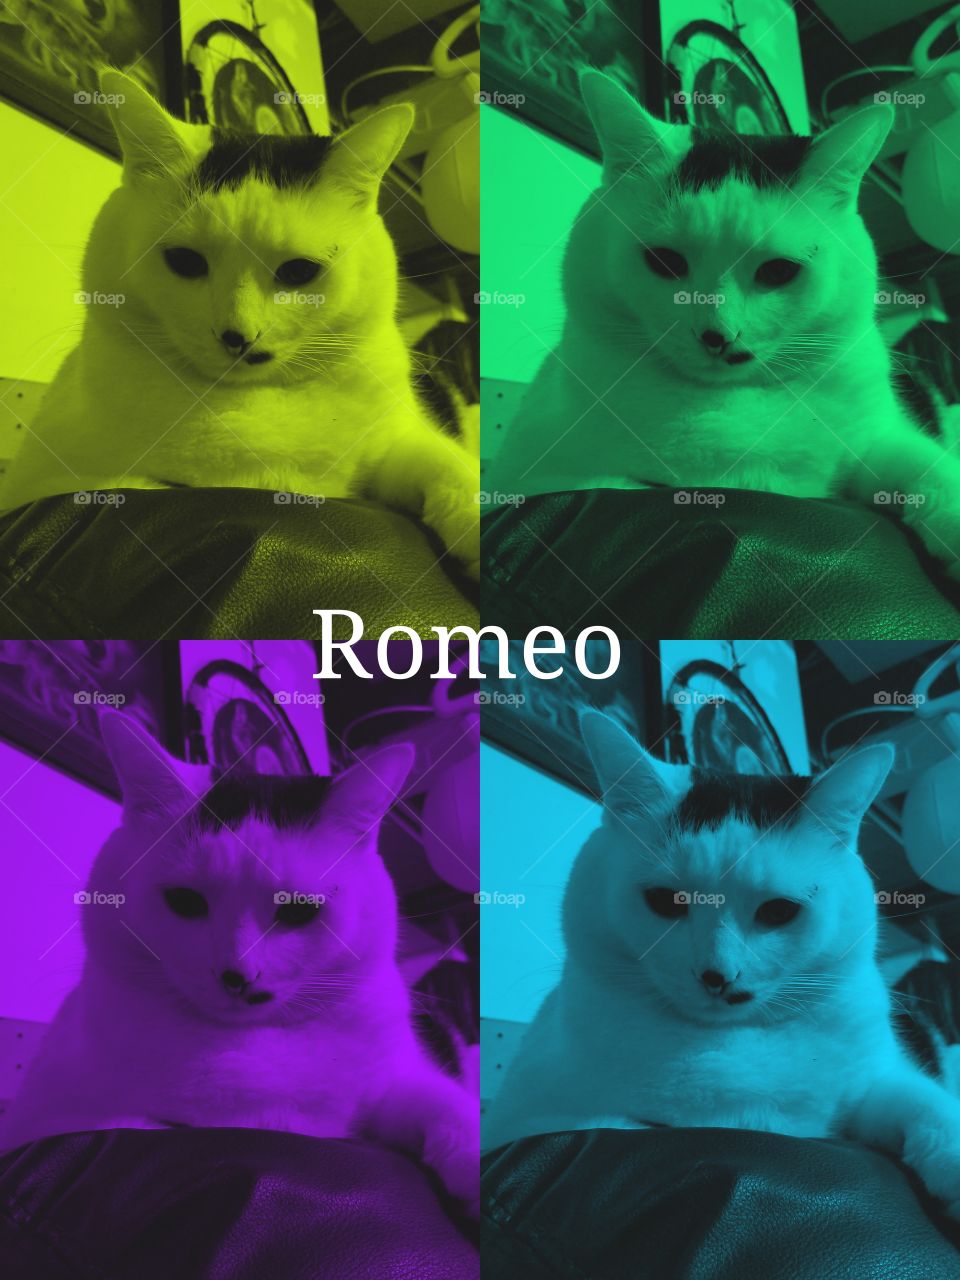 Our friend Romeo